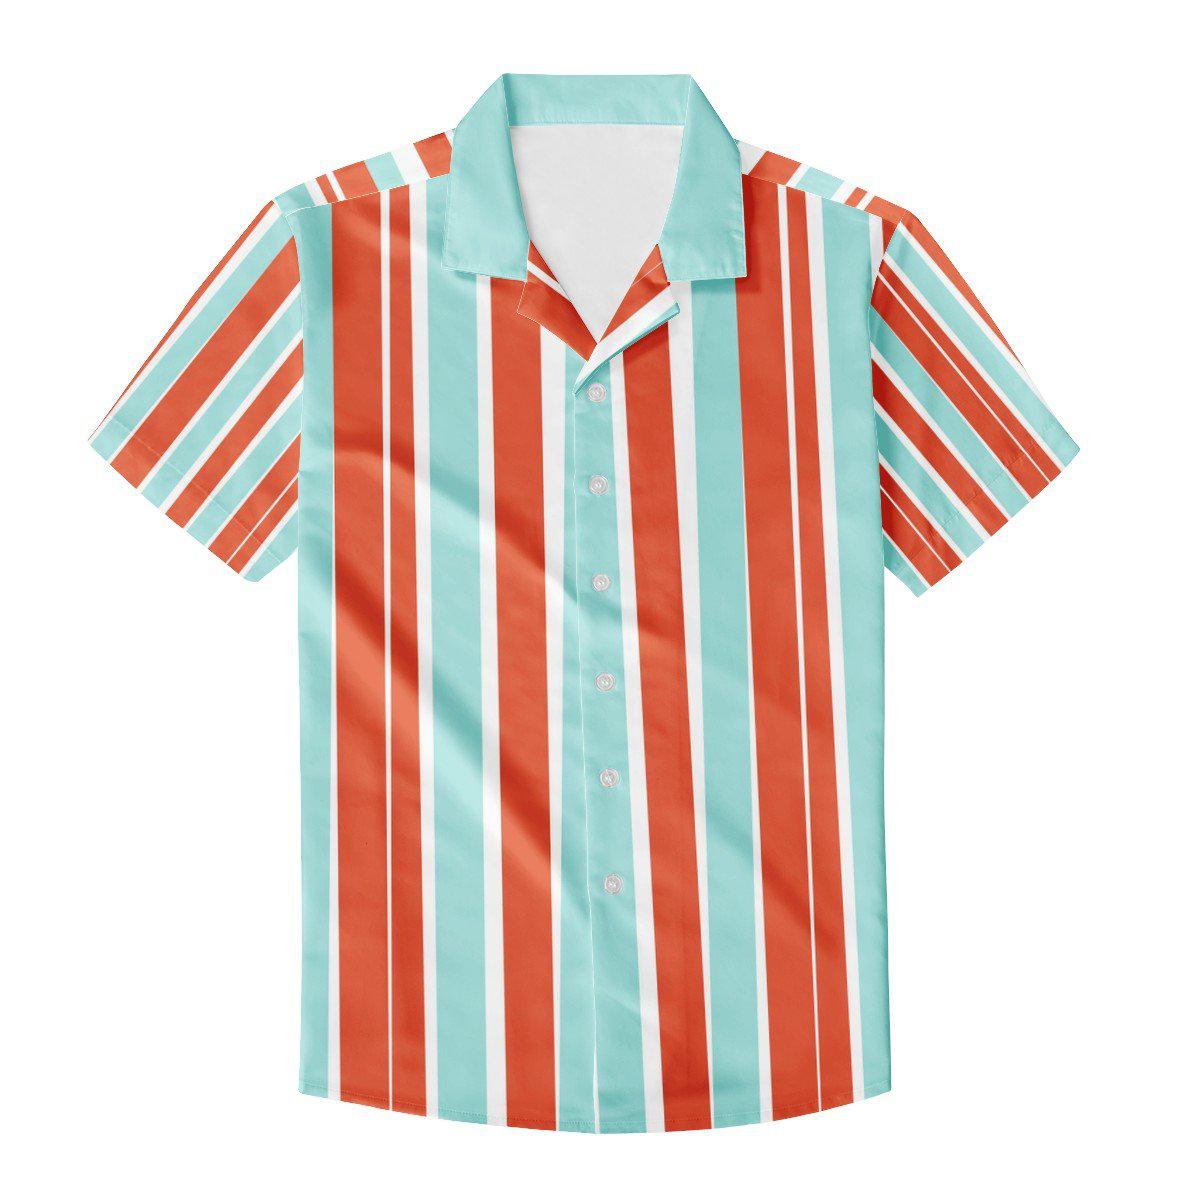 Carnival Stripes Men's Casual Collared Collared Shirt – INKofART.com